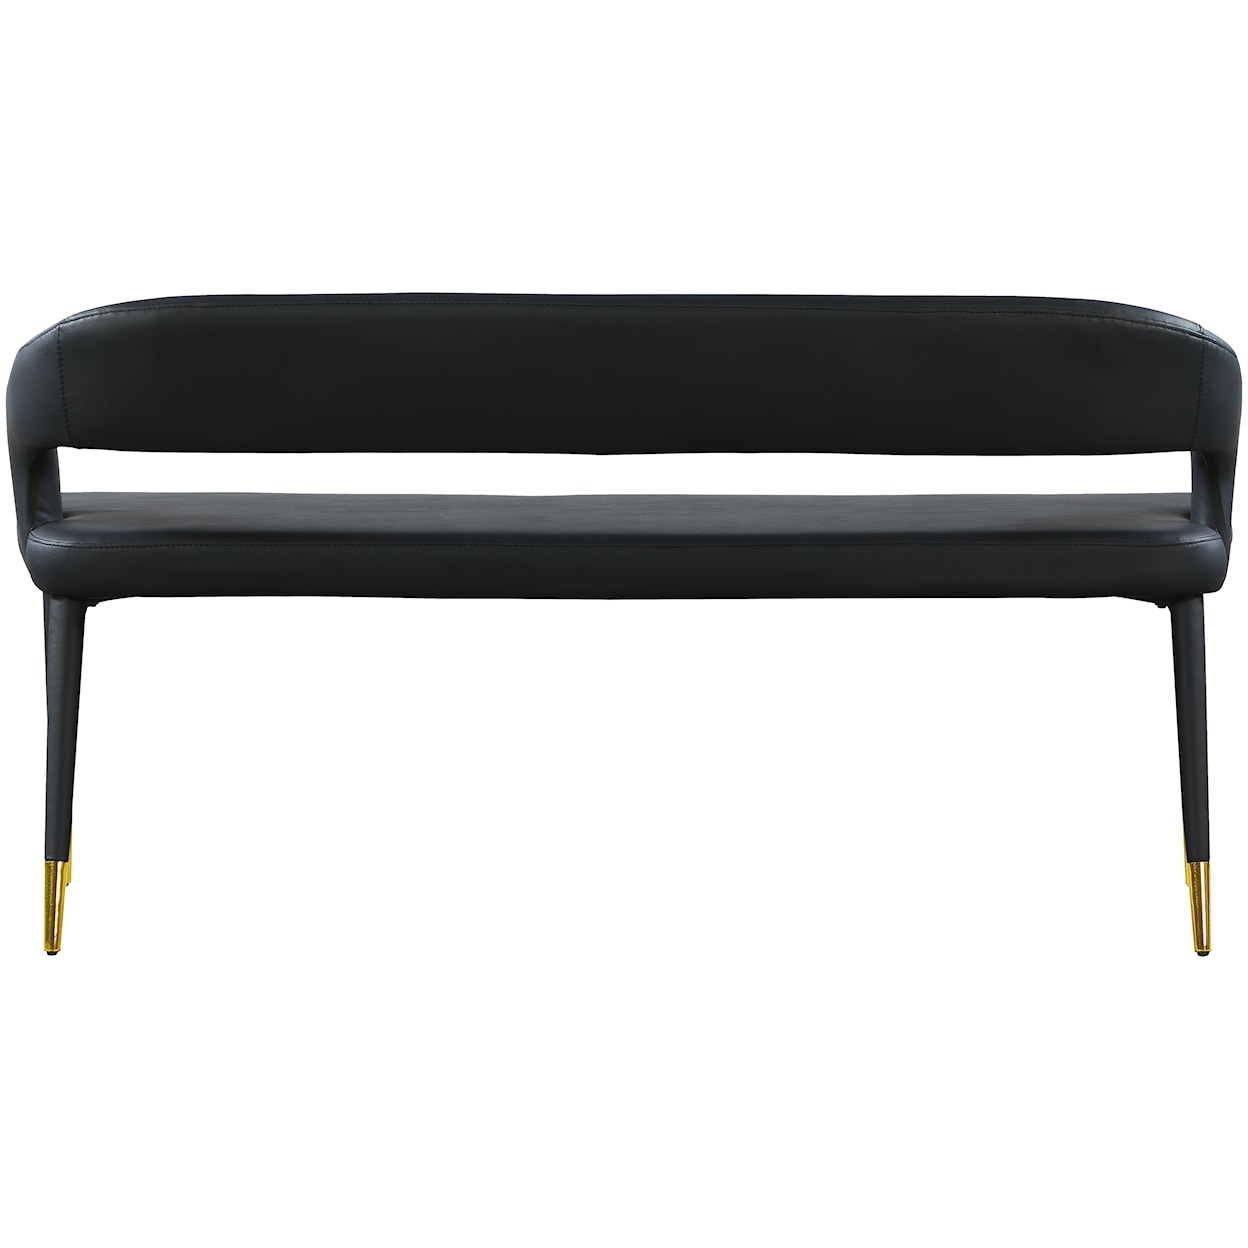 Meridian Furniture Destiny Upholstered Black Faux Leather Bench